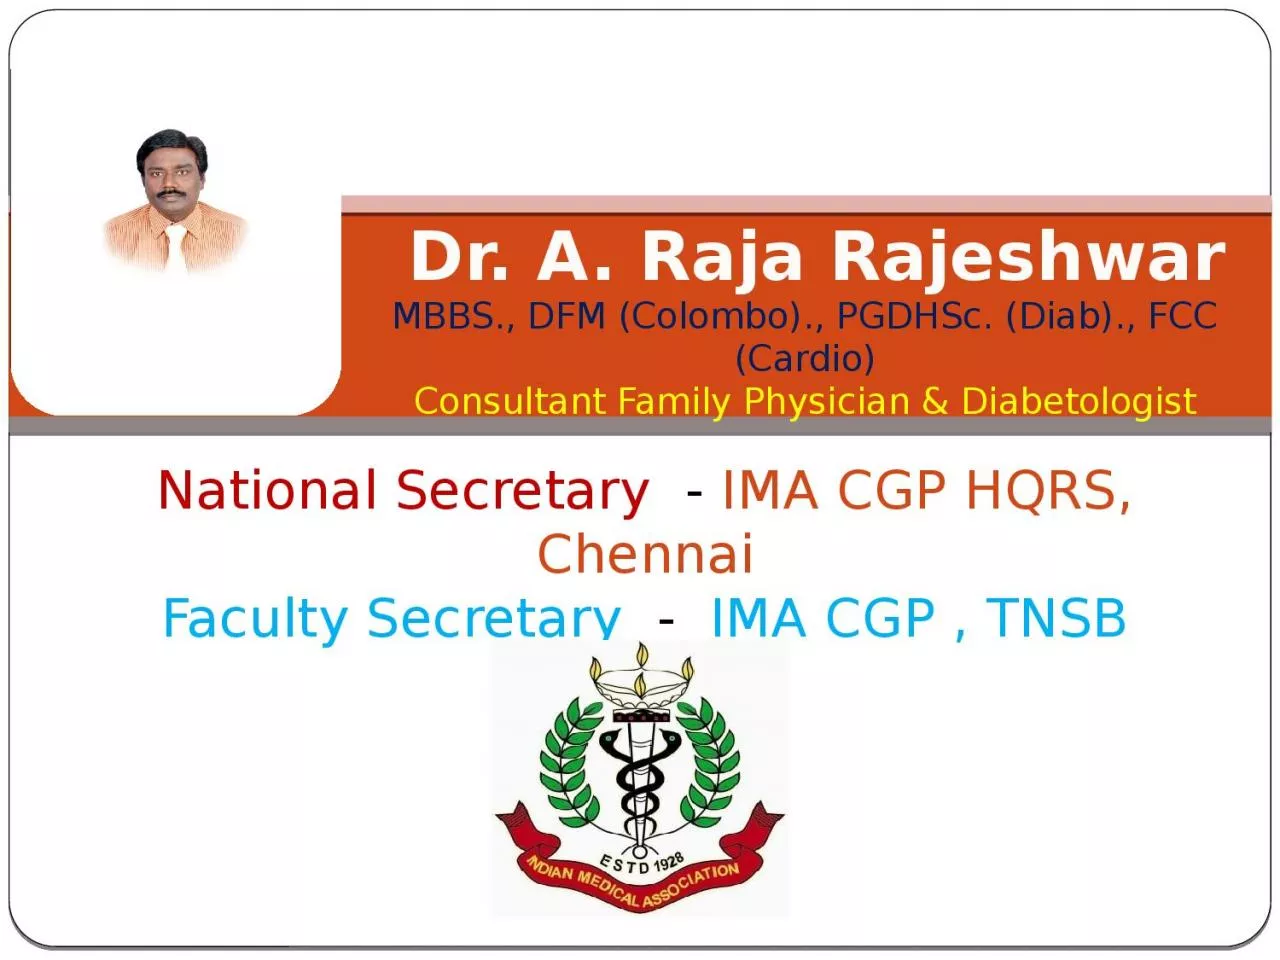 Dr. A. Raja Rajeshwar